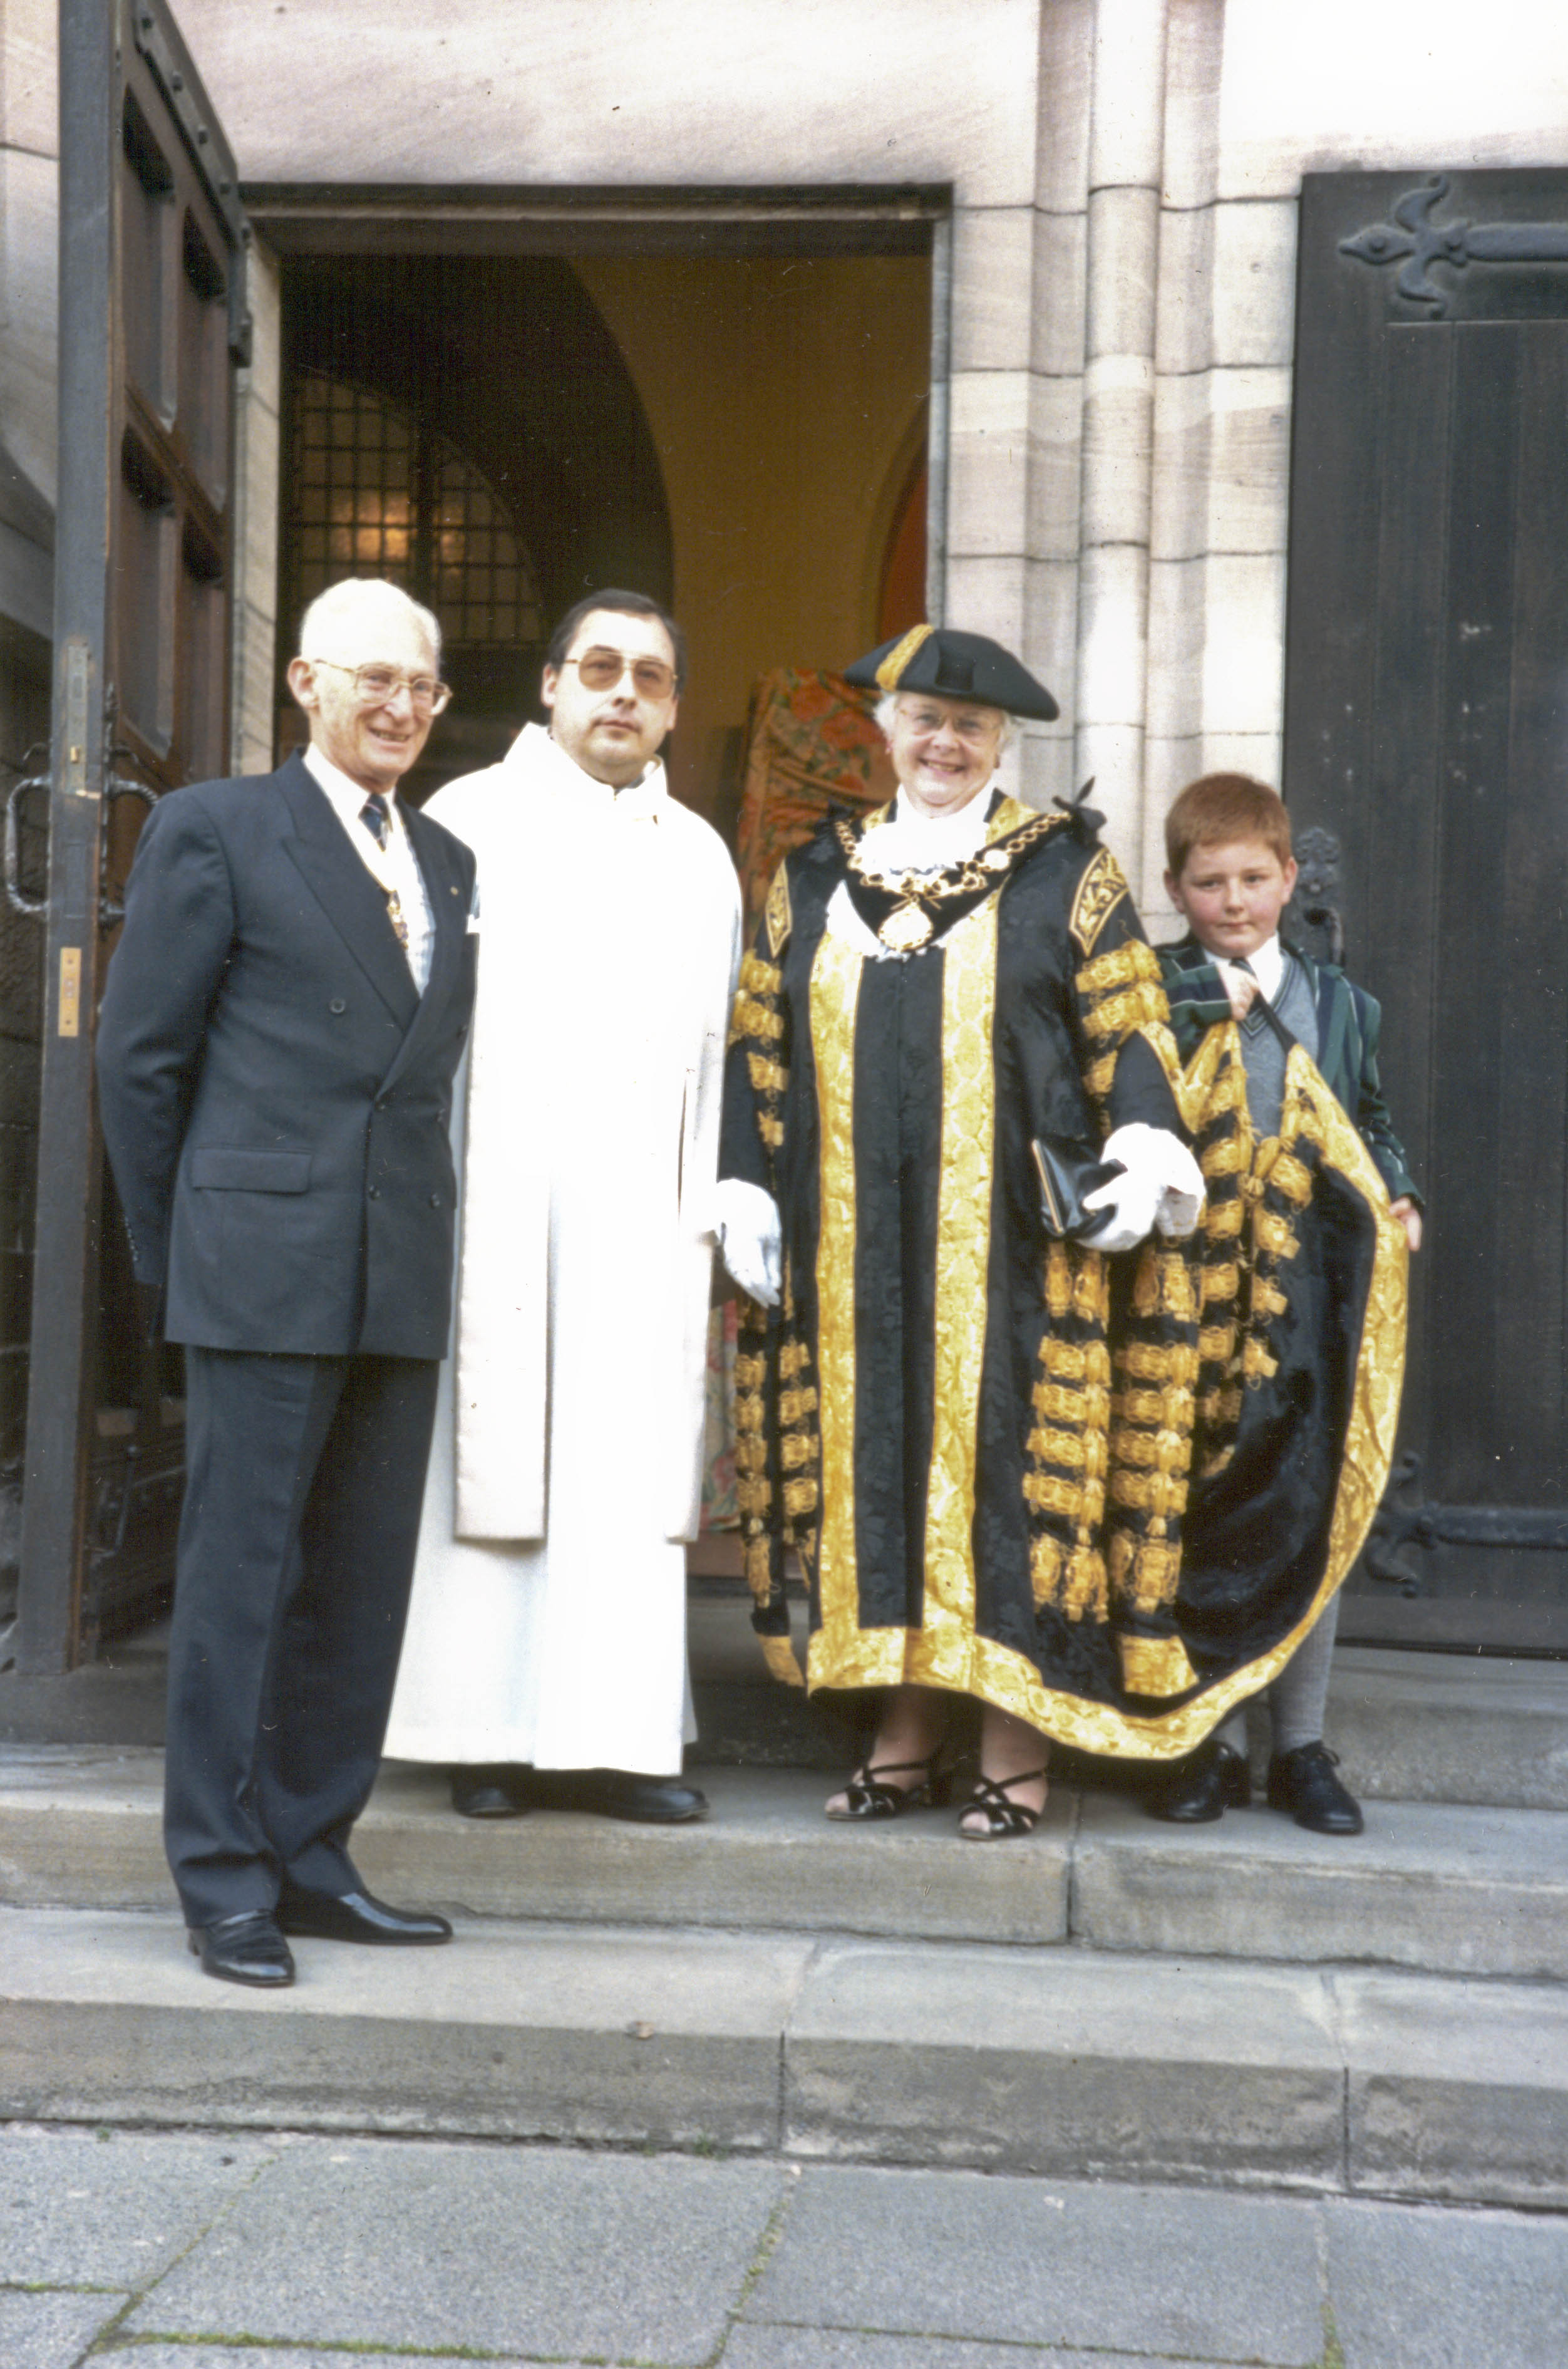 Fr Sharrocks and Lord Mayor